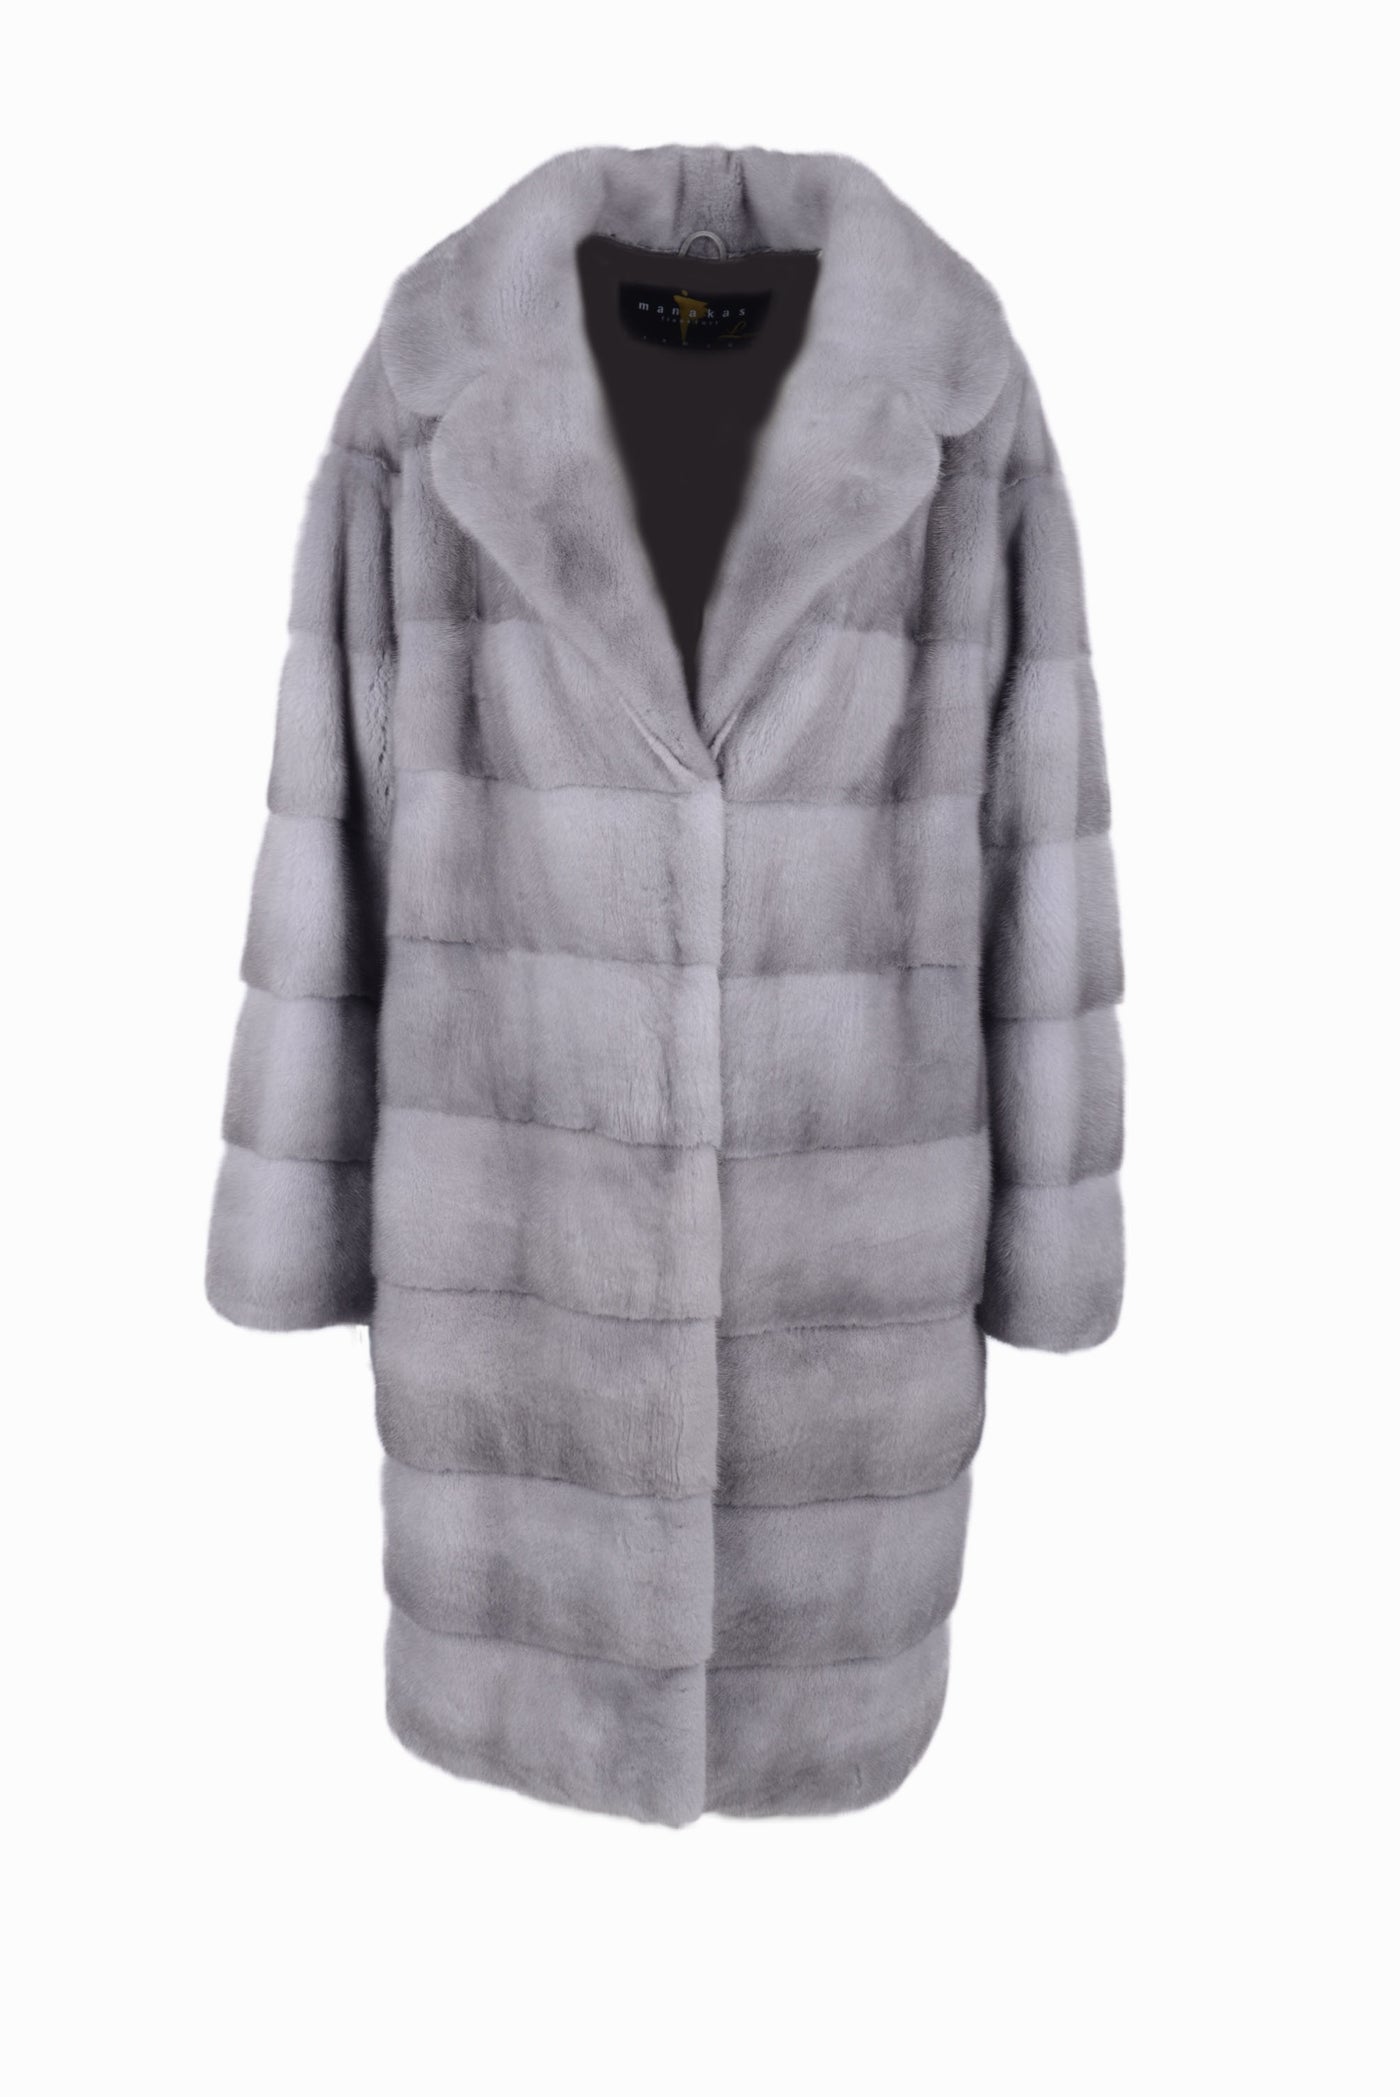 Classy basic mink fur coat with english collar